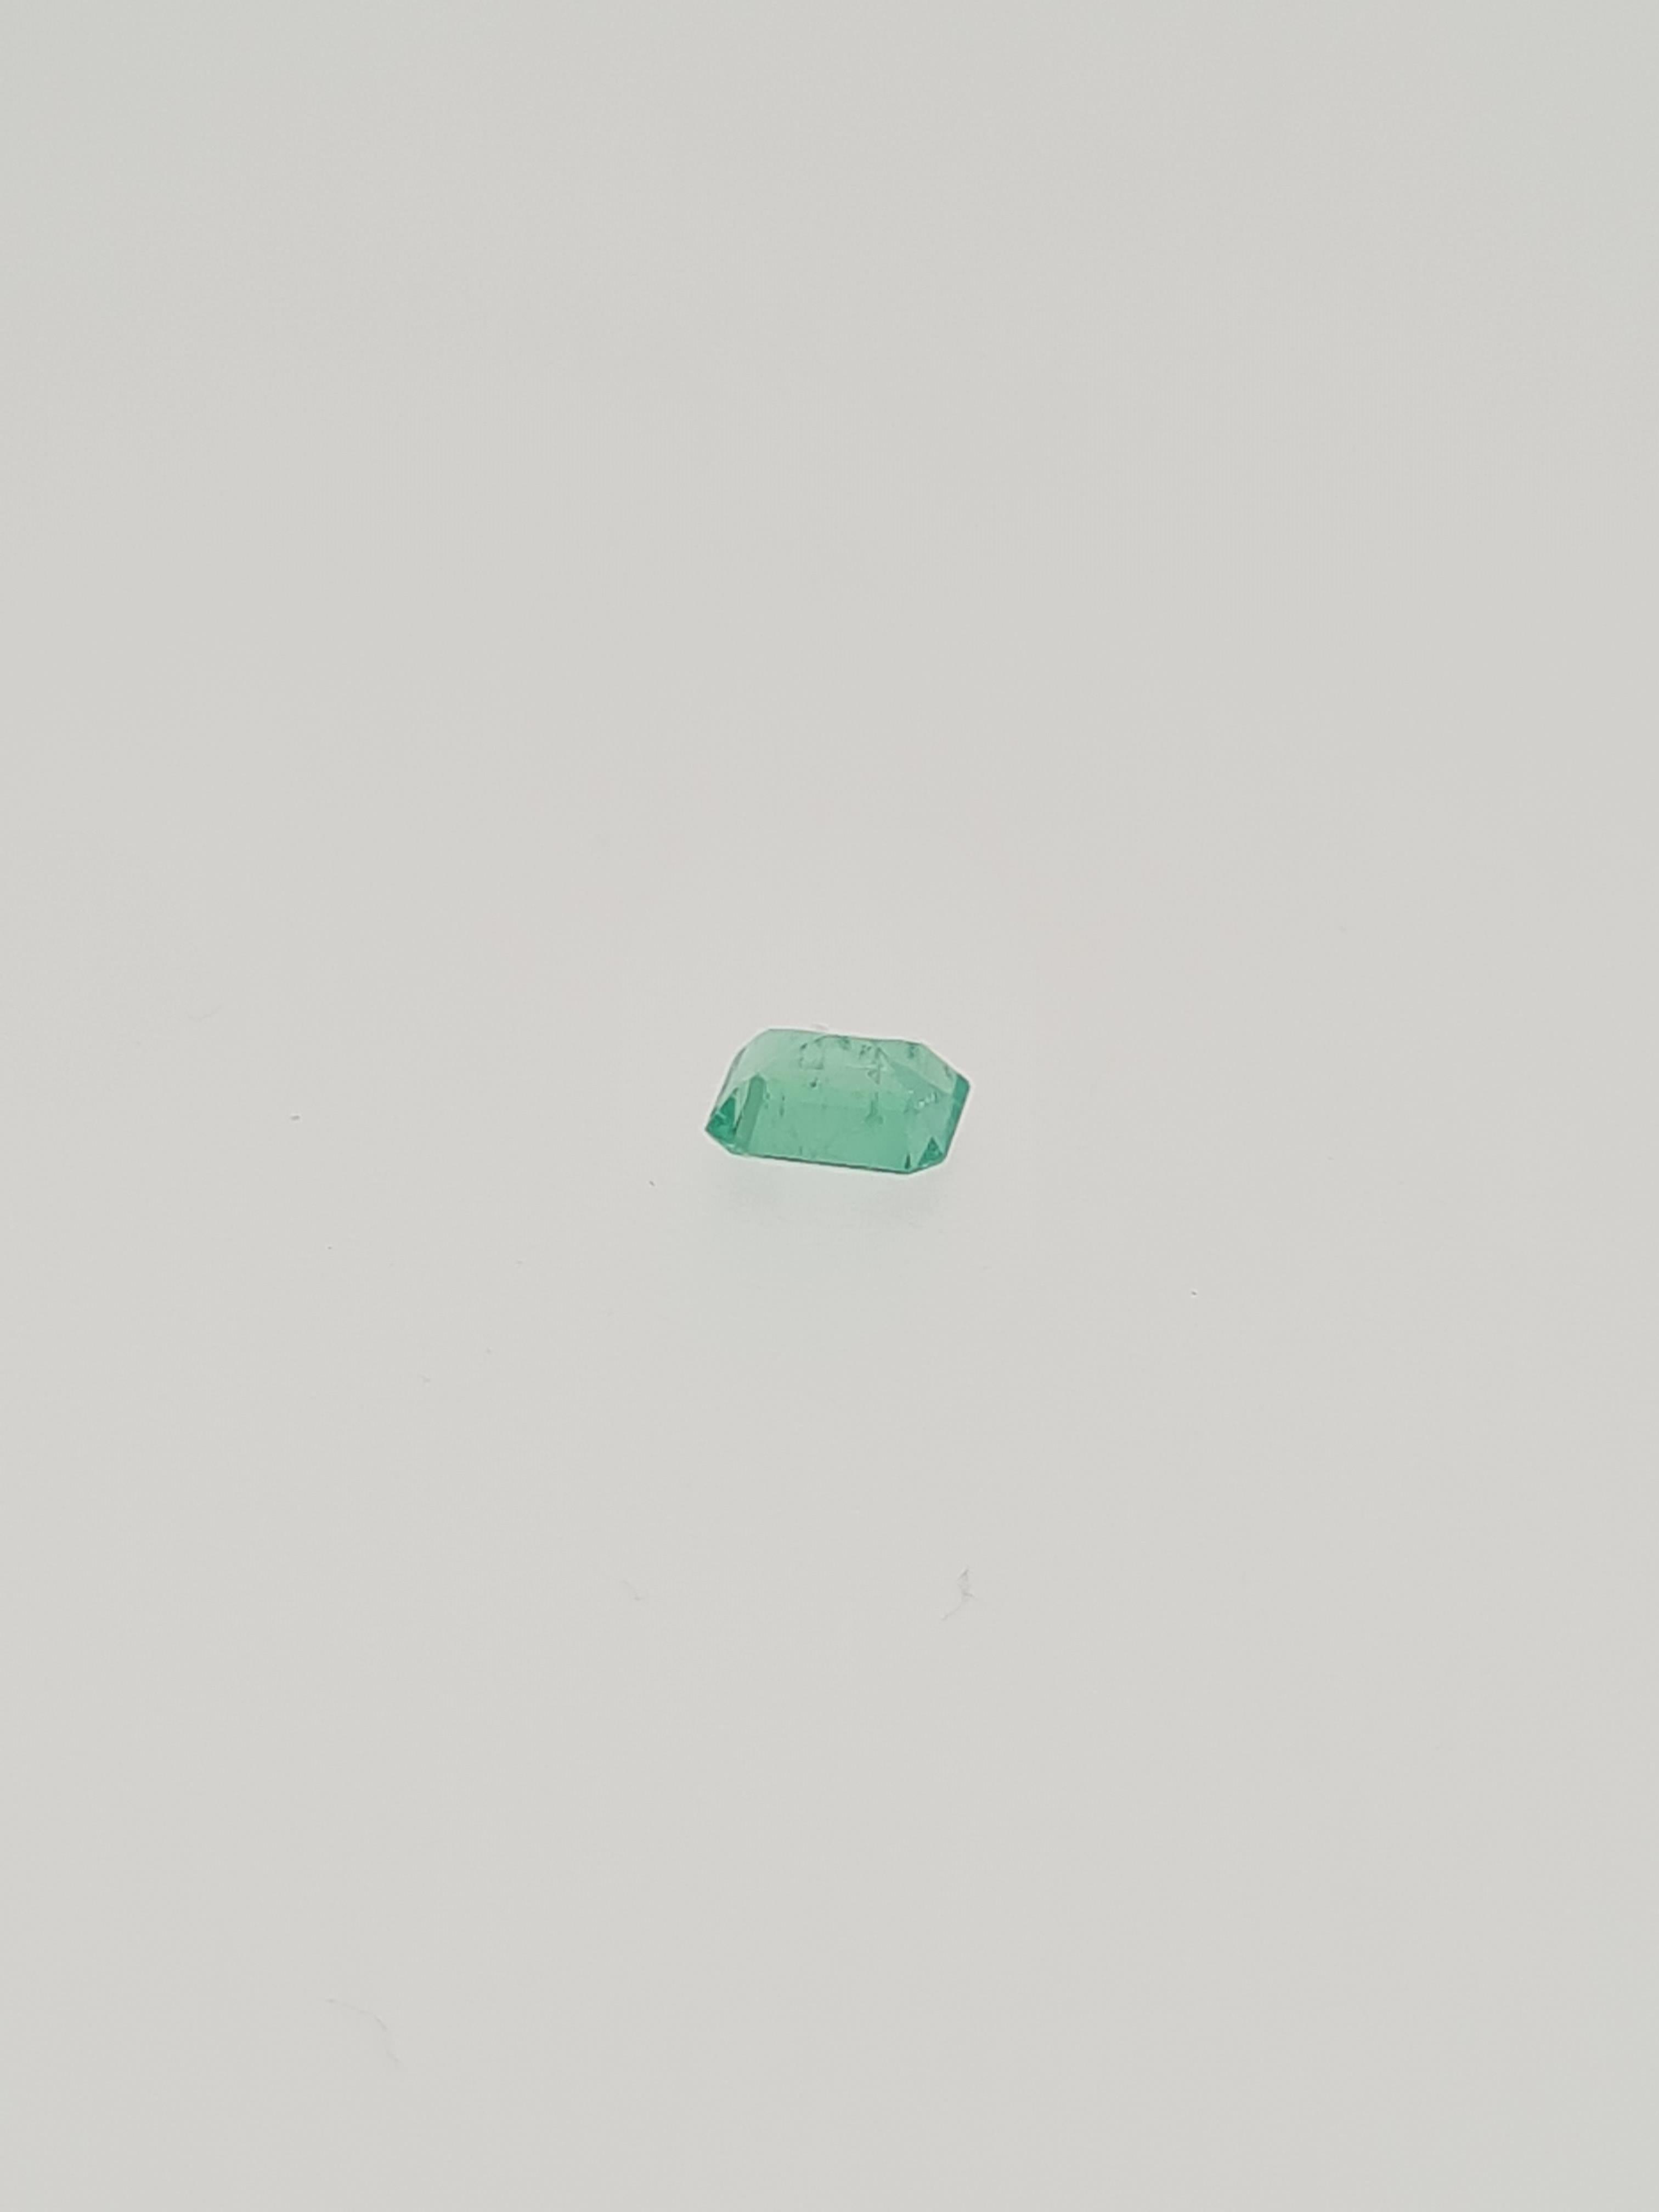 Emerald step-cut gemstone - Image 3 of 5